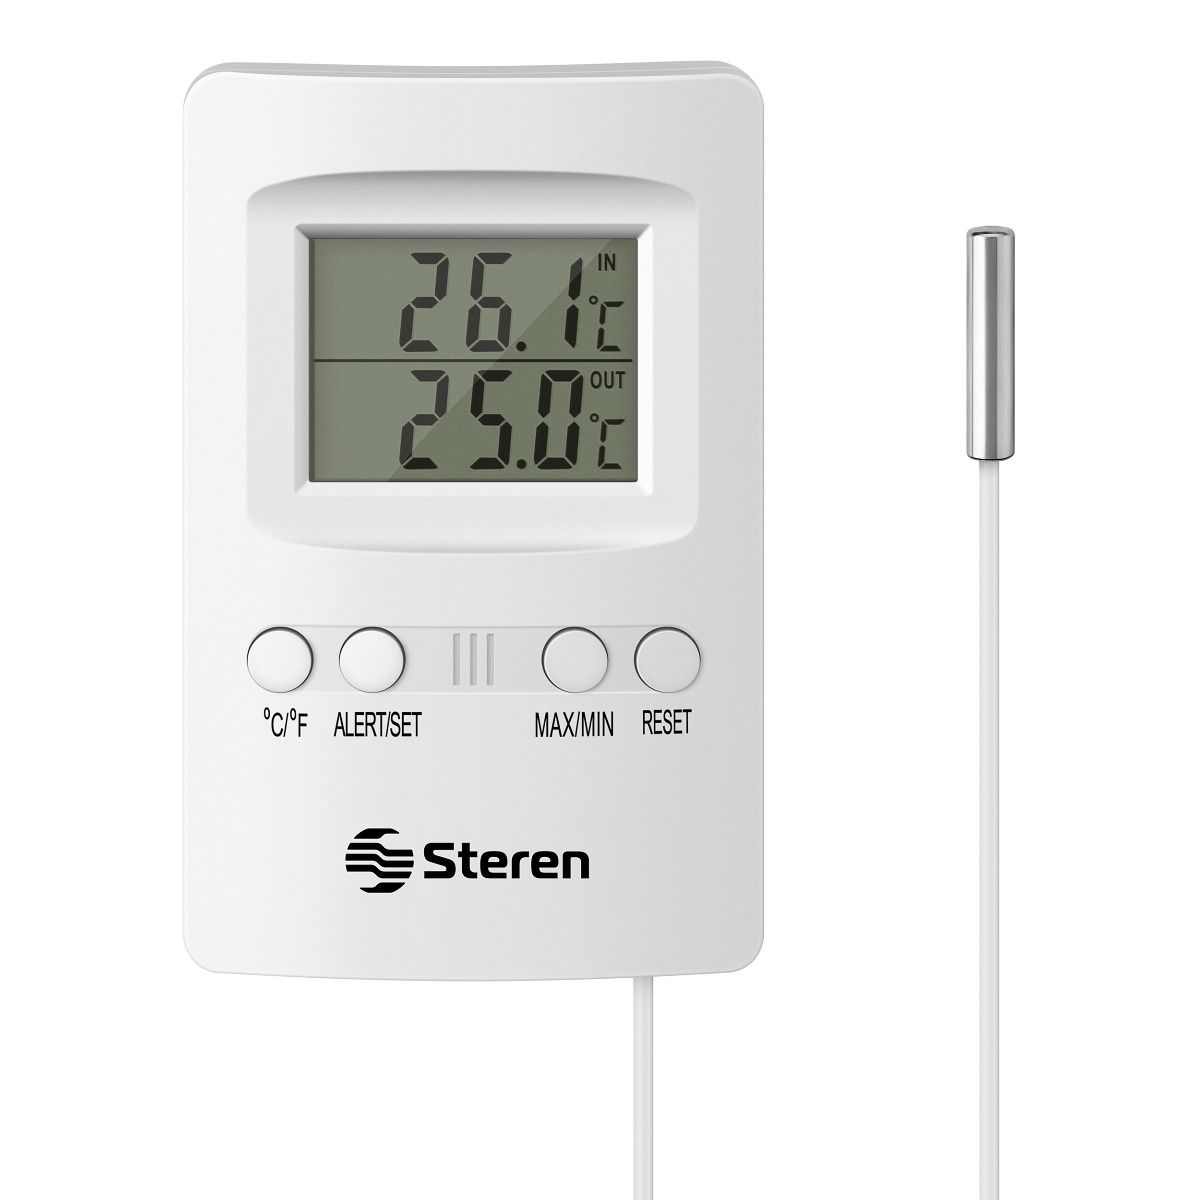 Termómetro para acuario display temperatura exterior e interior